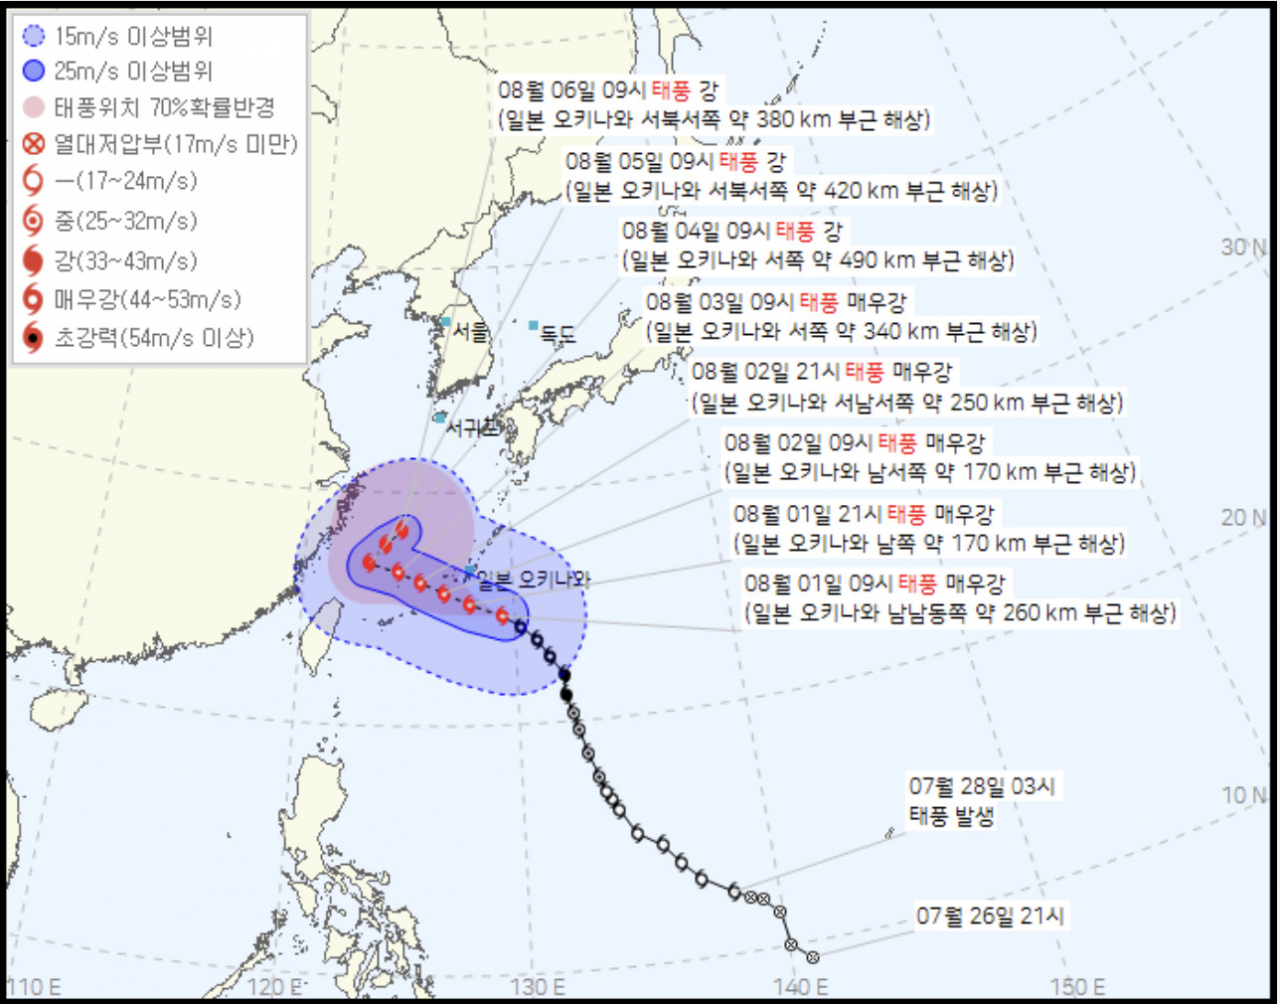 Typhoon Khanun changes path, may approach S. Korea